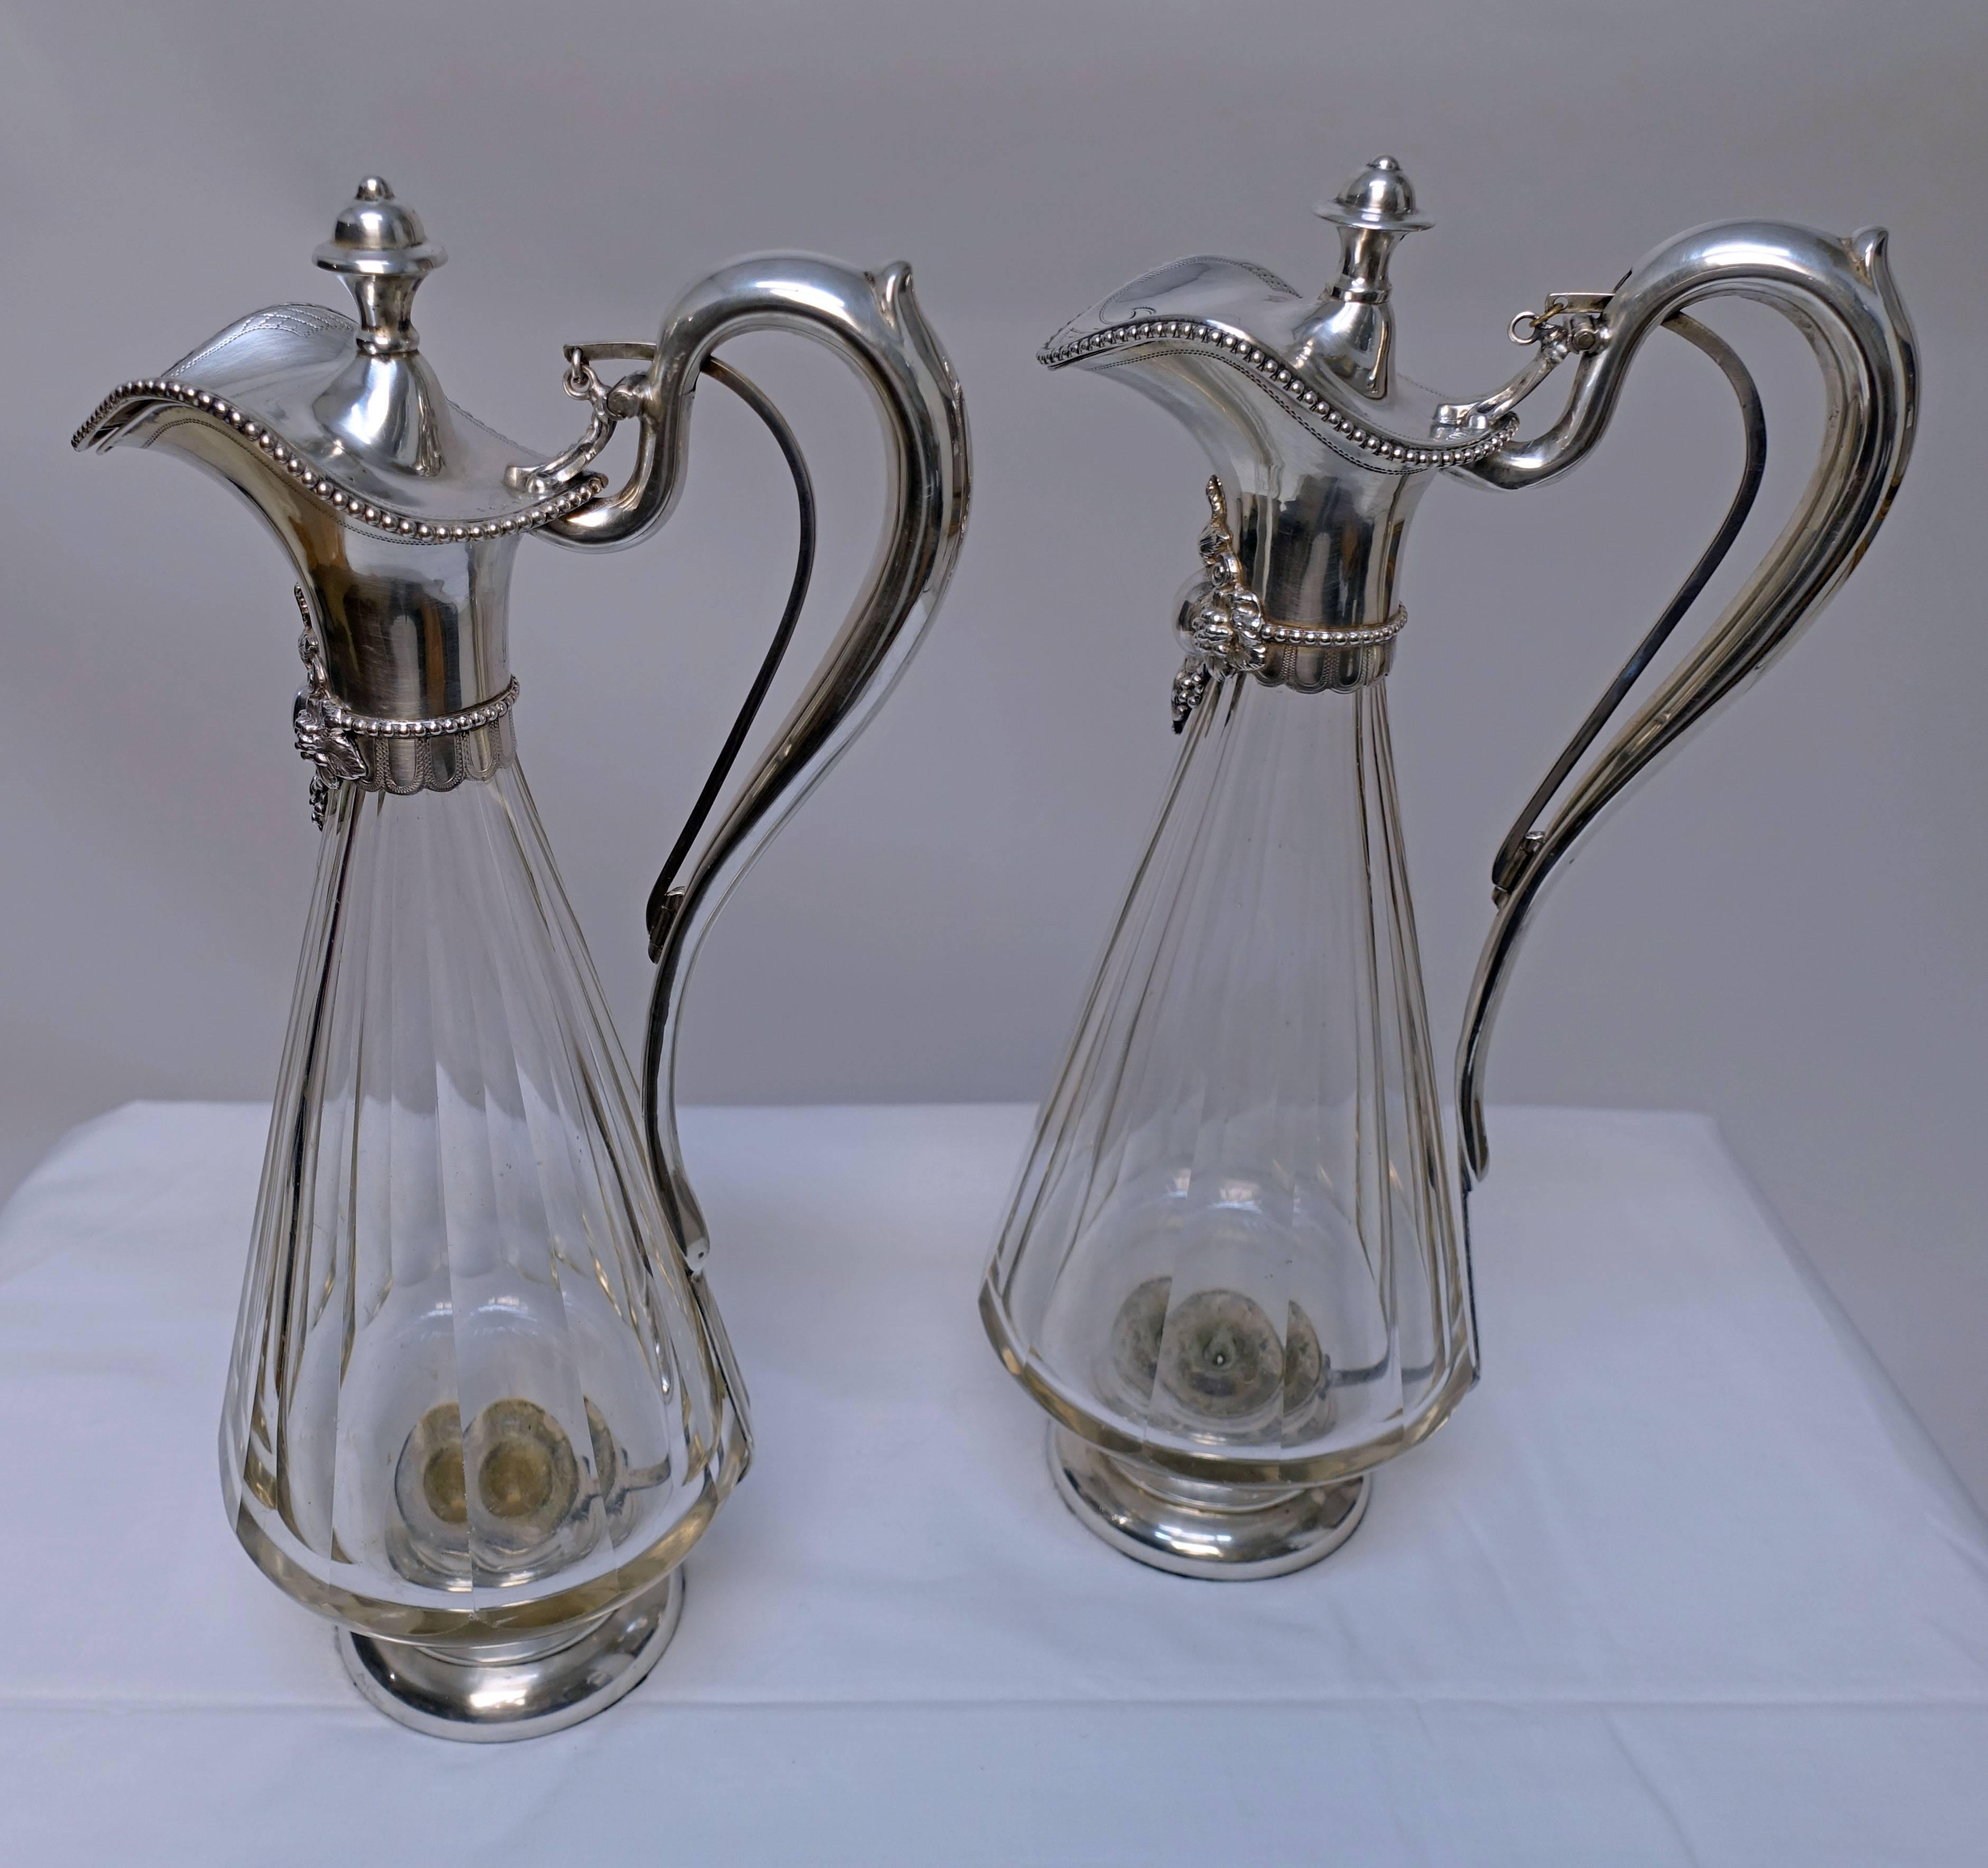 Art Nouveau 19th Century Silver and Cut-Glass Wine Clarets Decanters